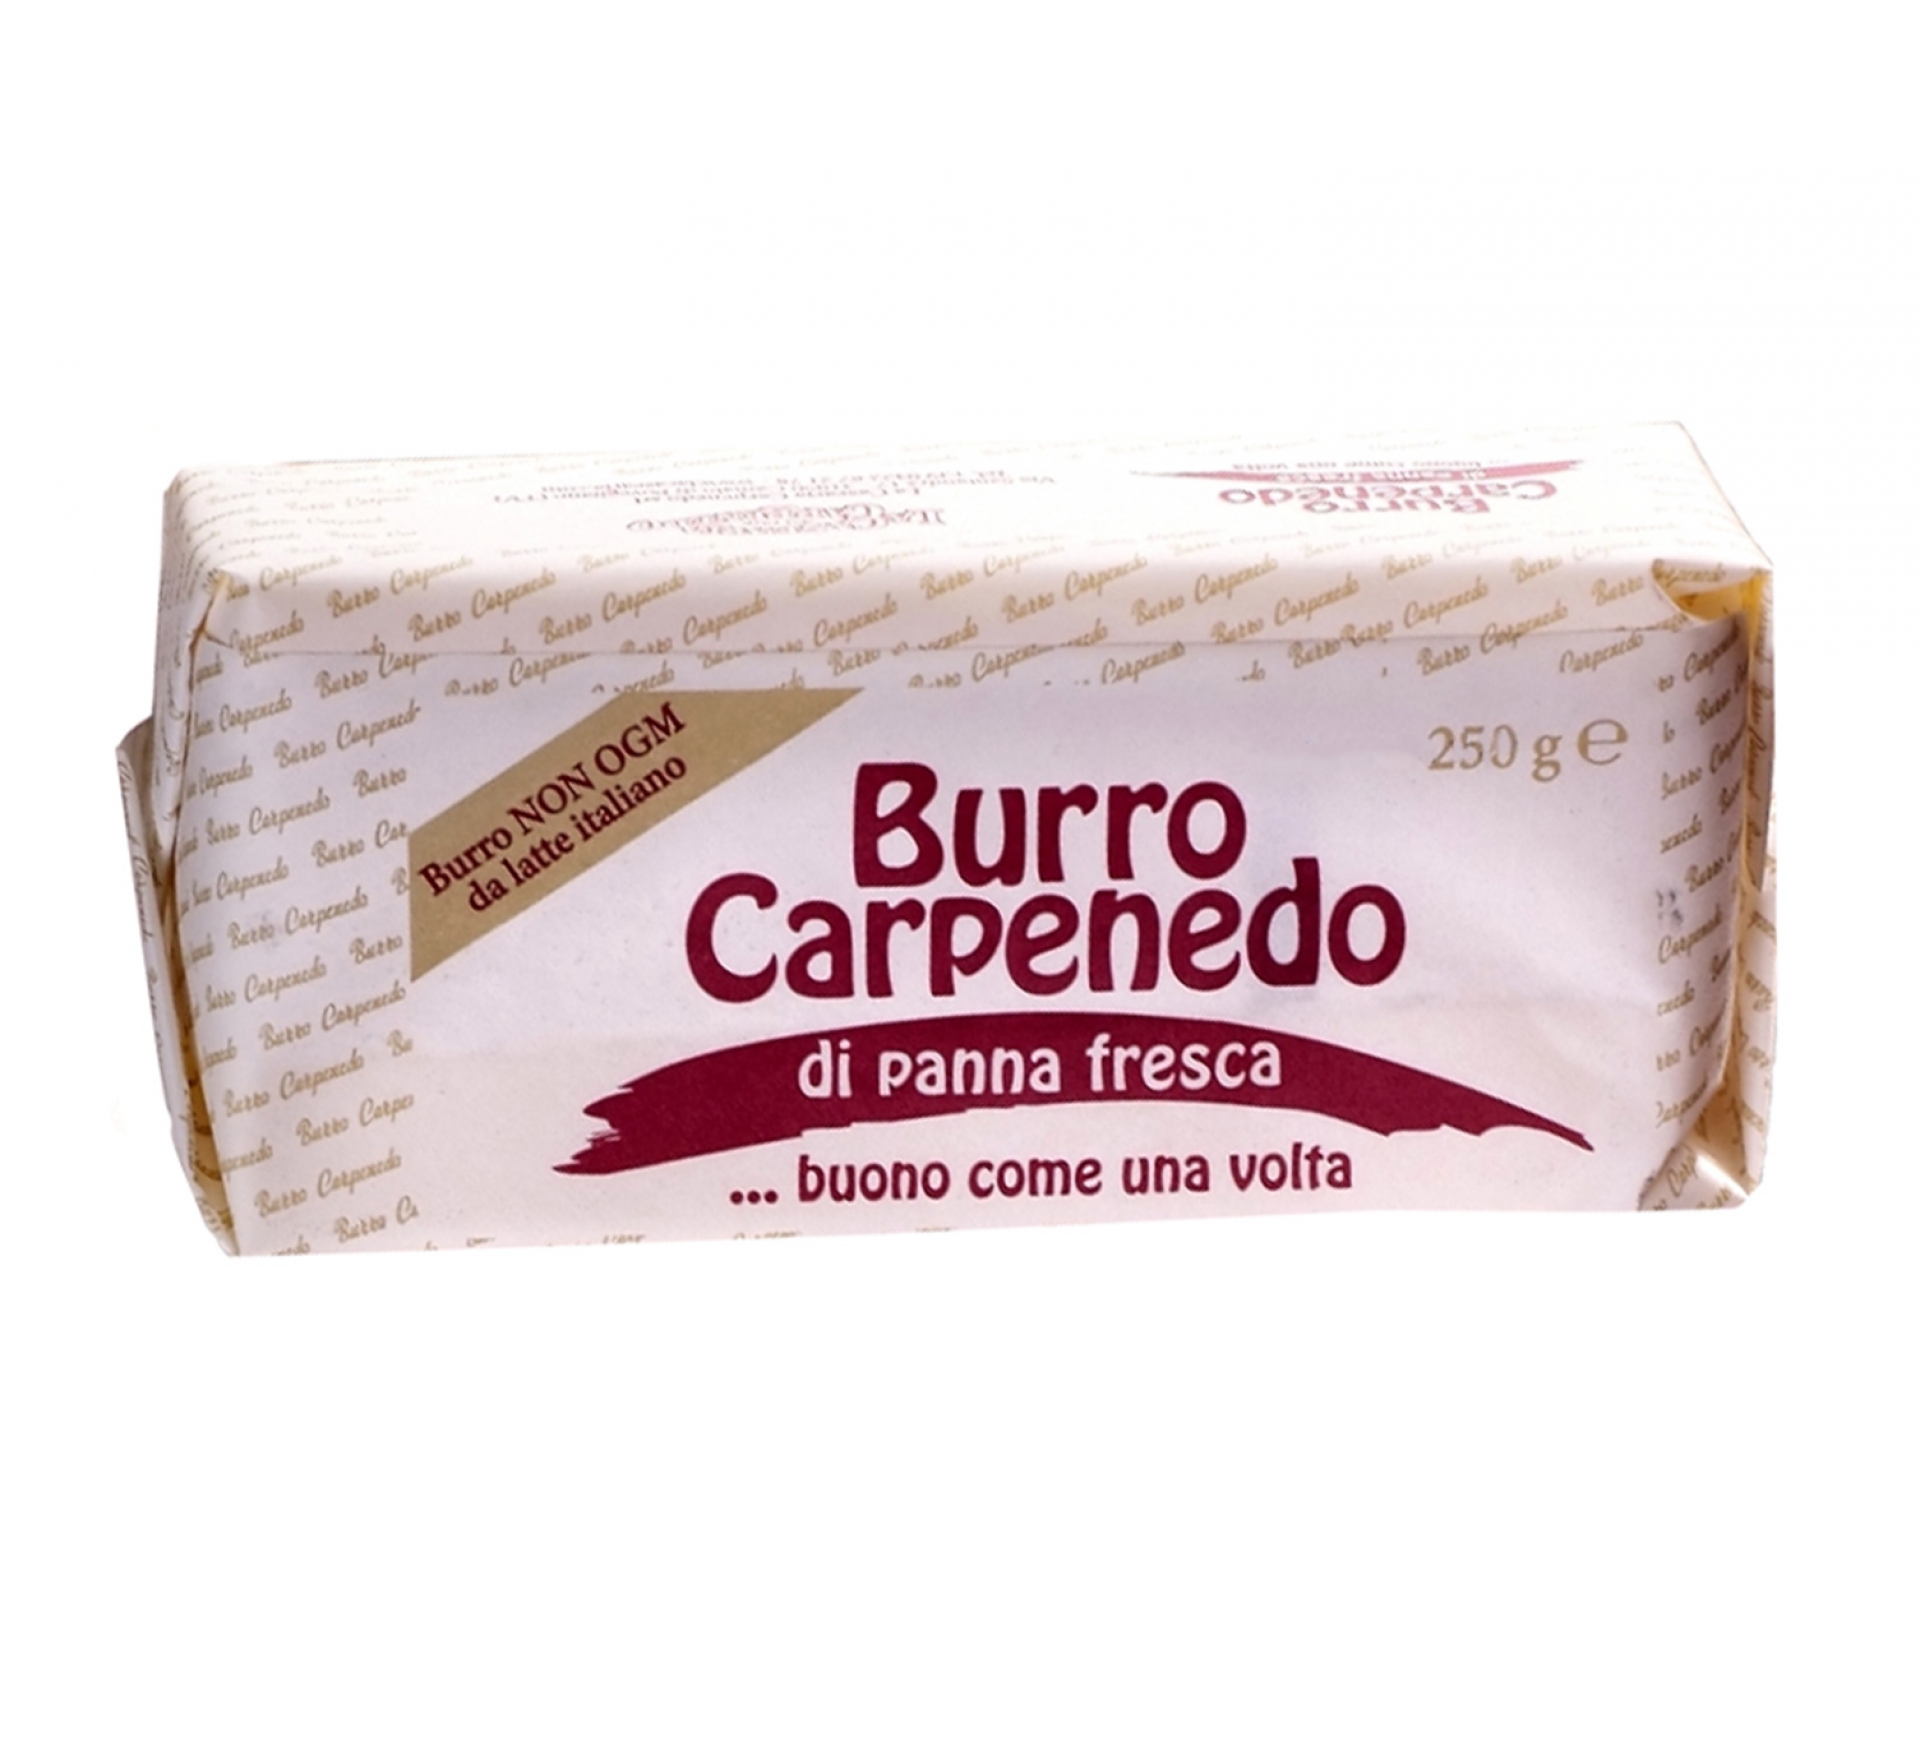 Burro Carpenedo